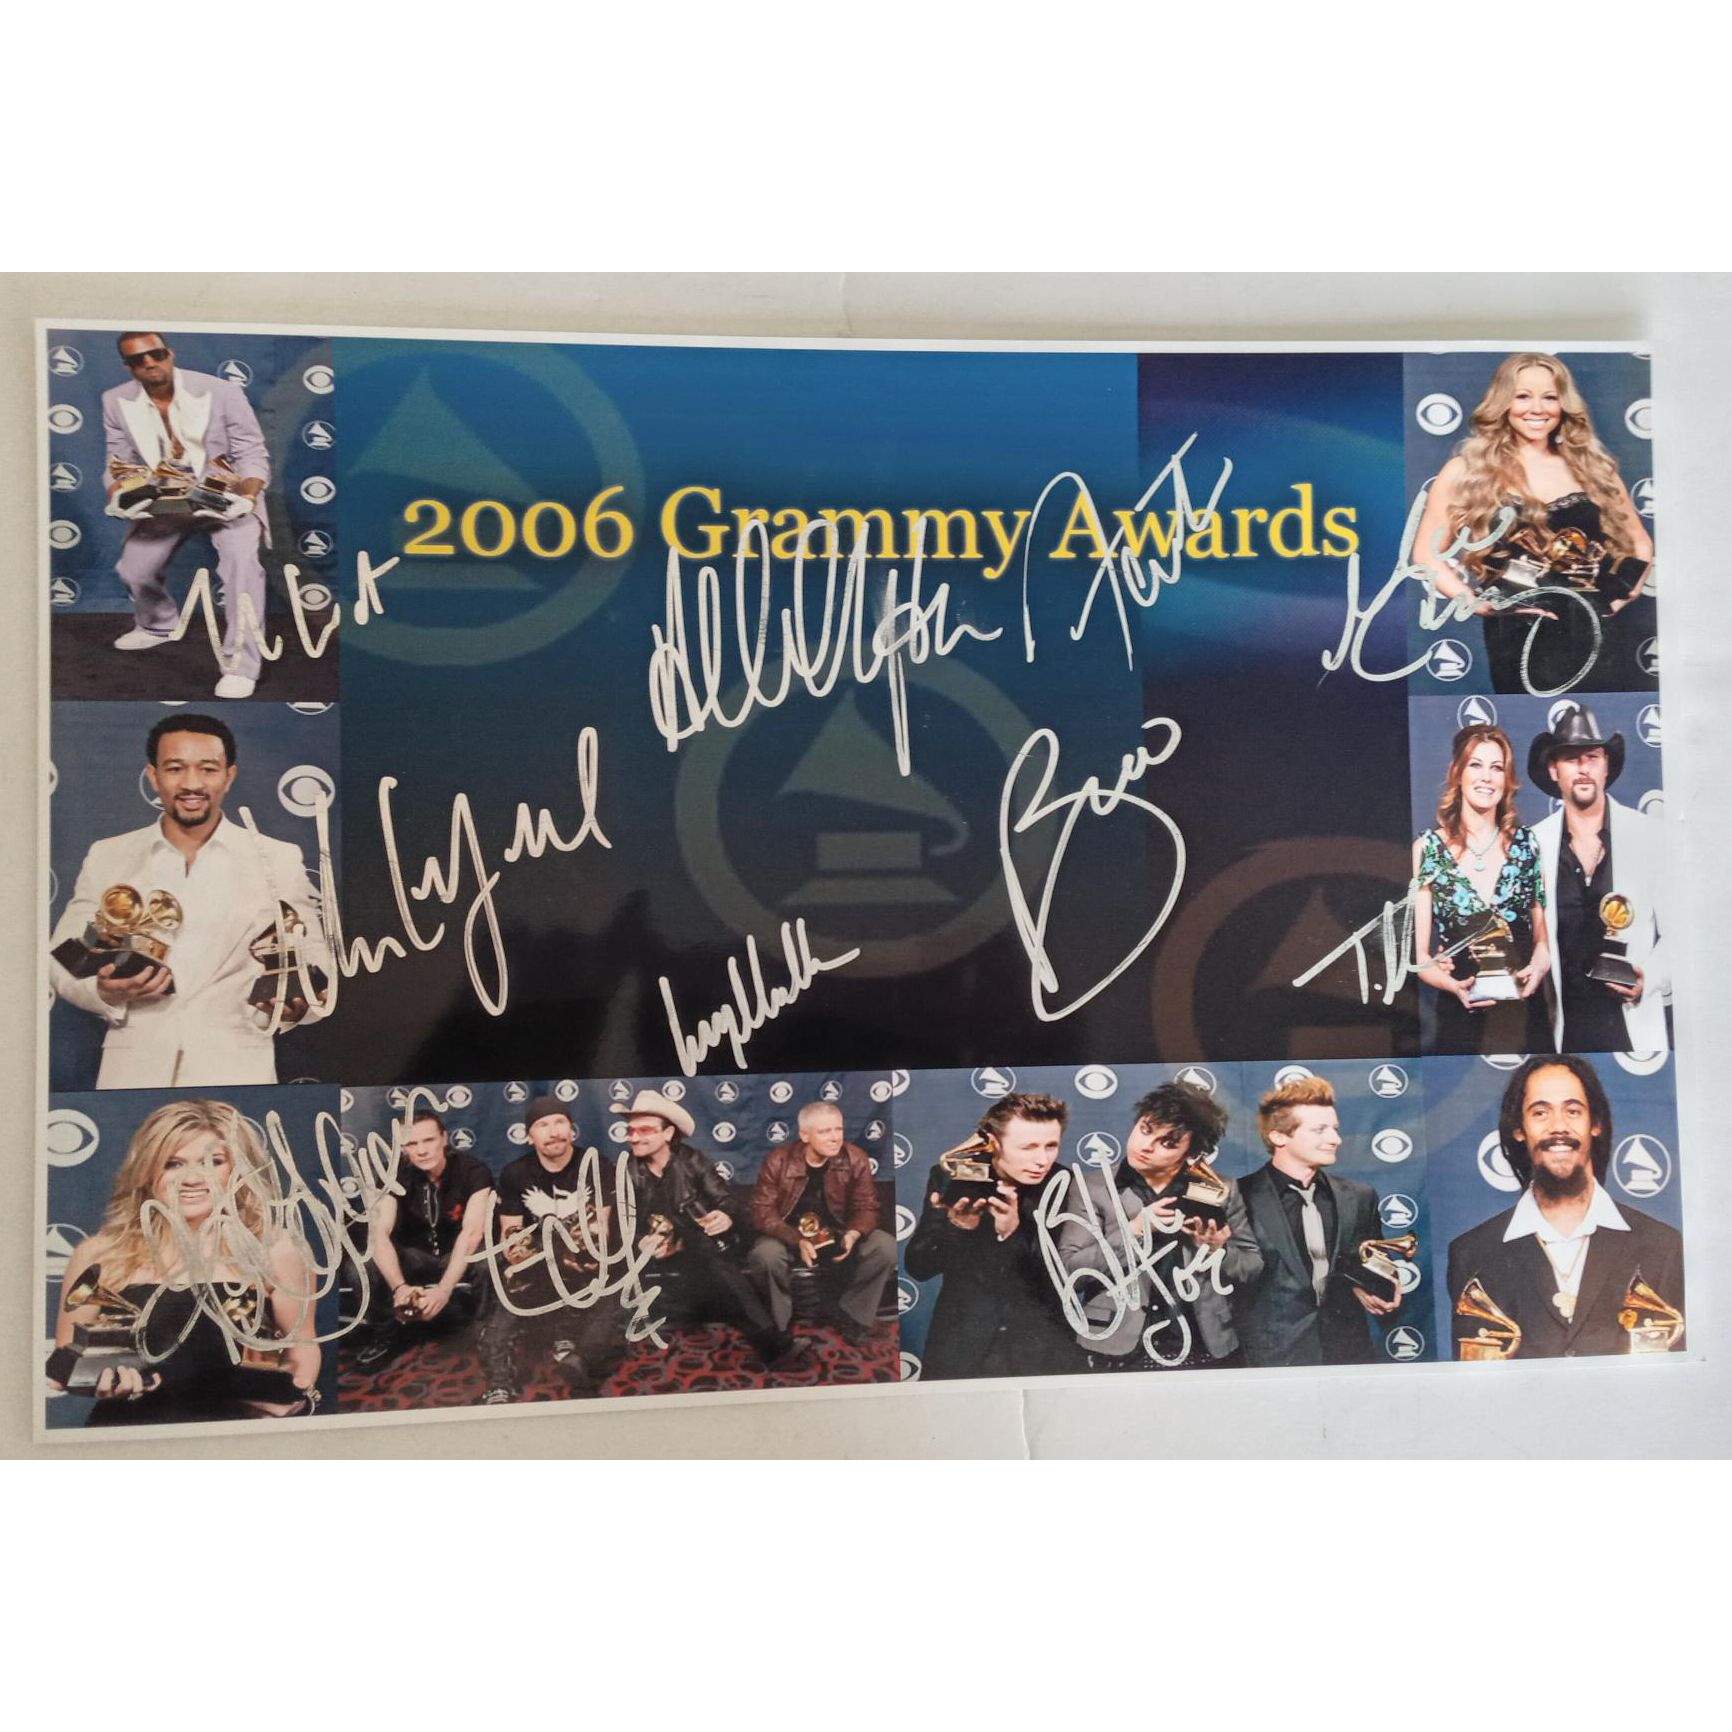 Kanye West Bono Billie Joe Armstrong the edge 2006 Grammy Award winners signed photo